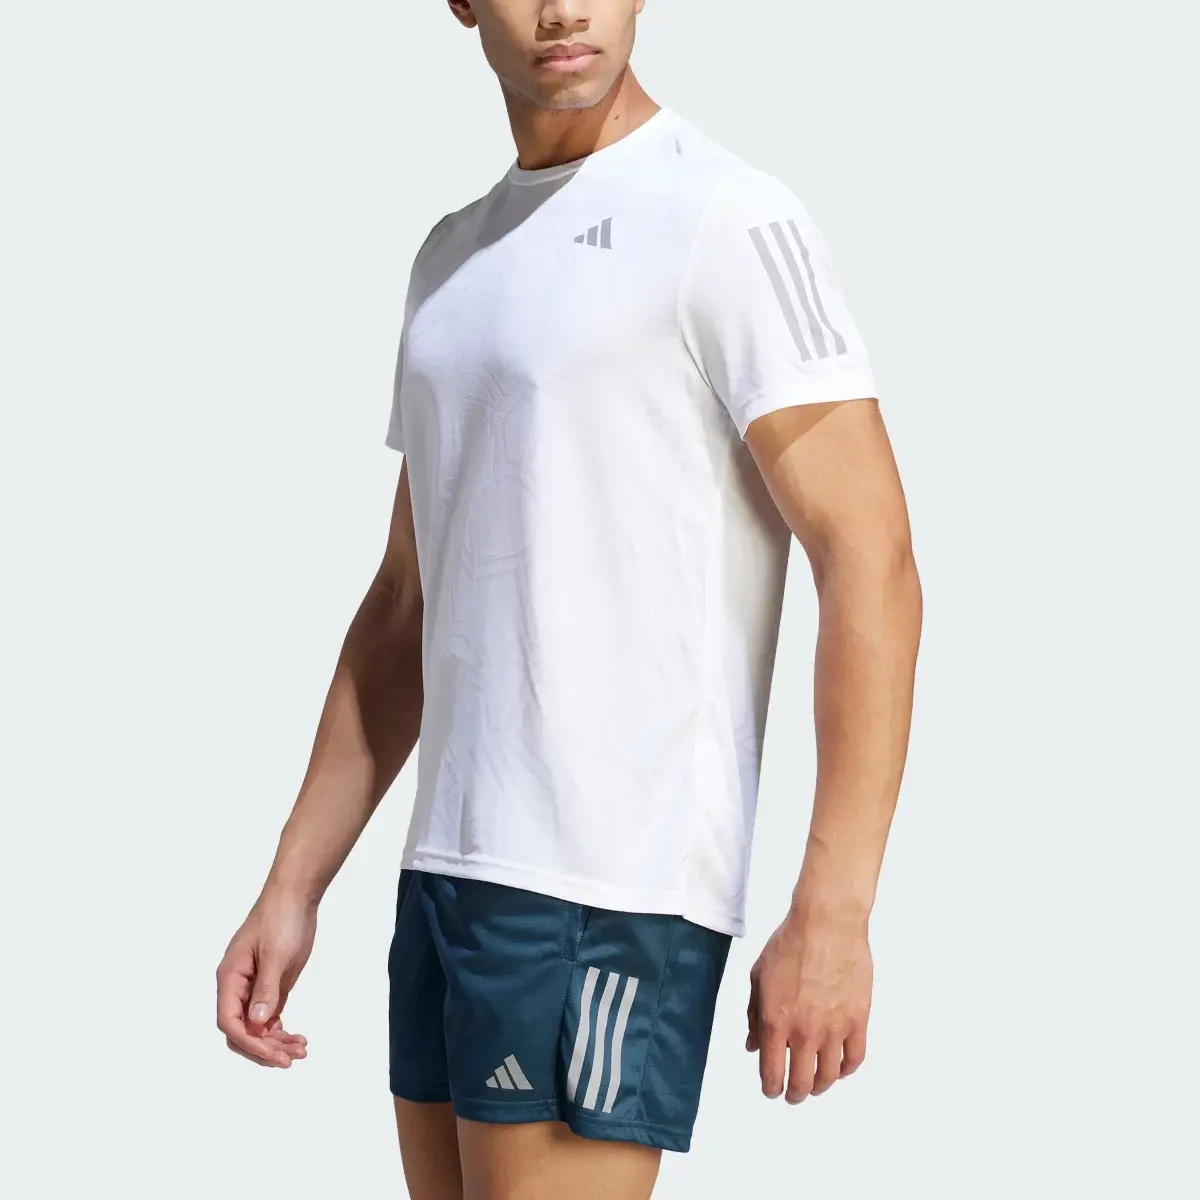 Adidas Own the Run Carbon Measured T-Shirt. 1